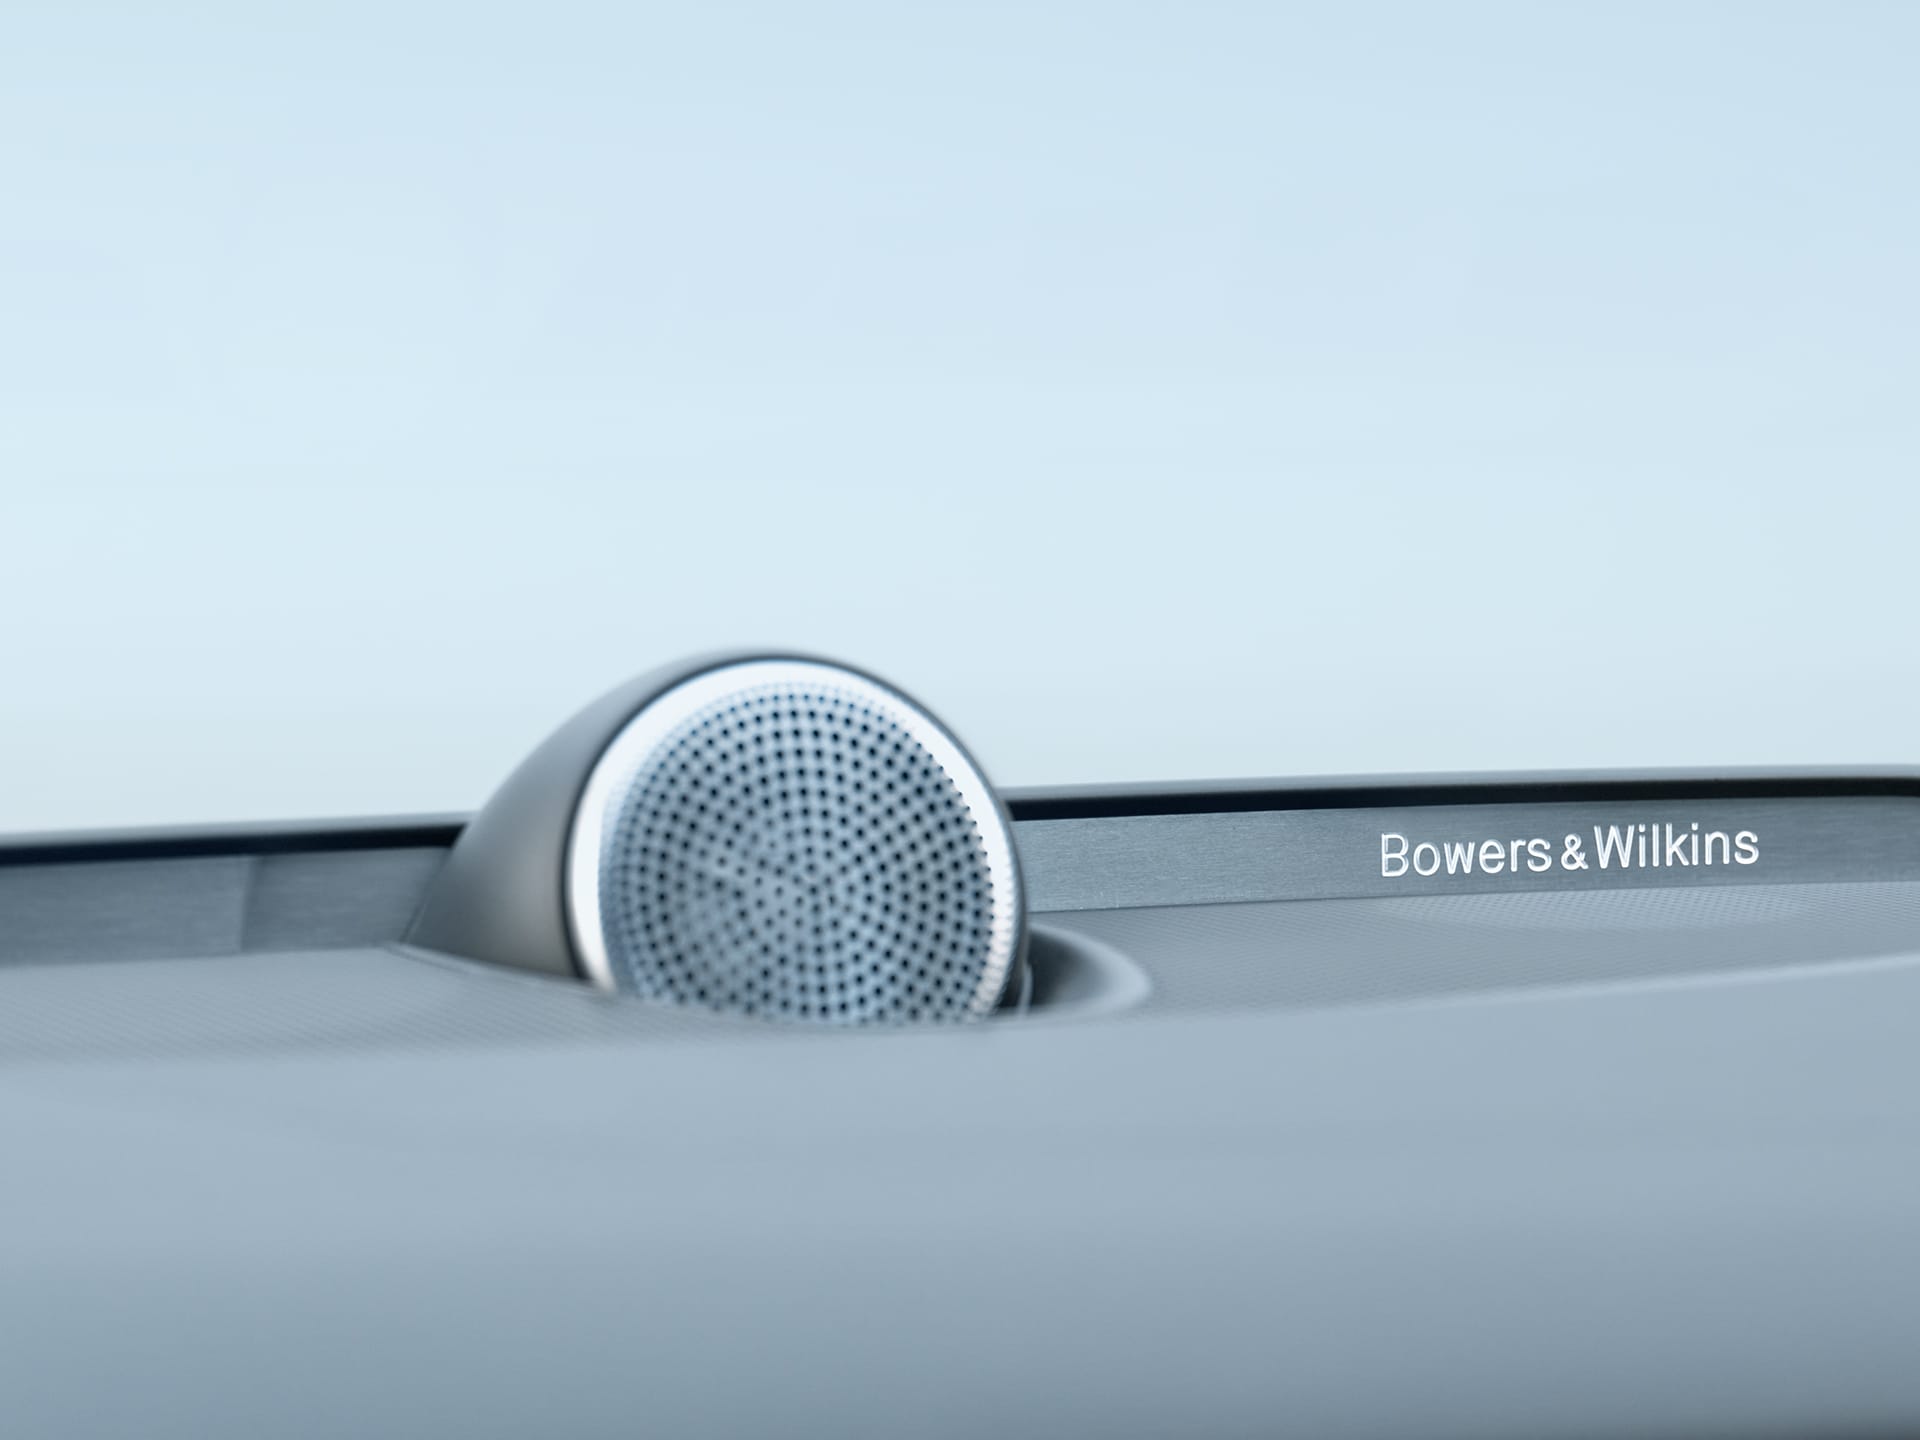 Bowers & Wilkins skaļruņi Volvo S60 sedana salonā.